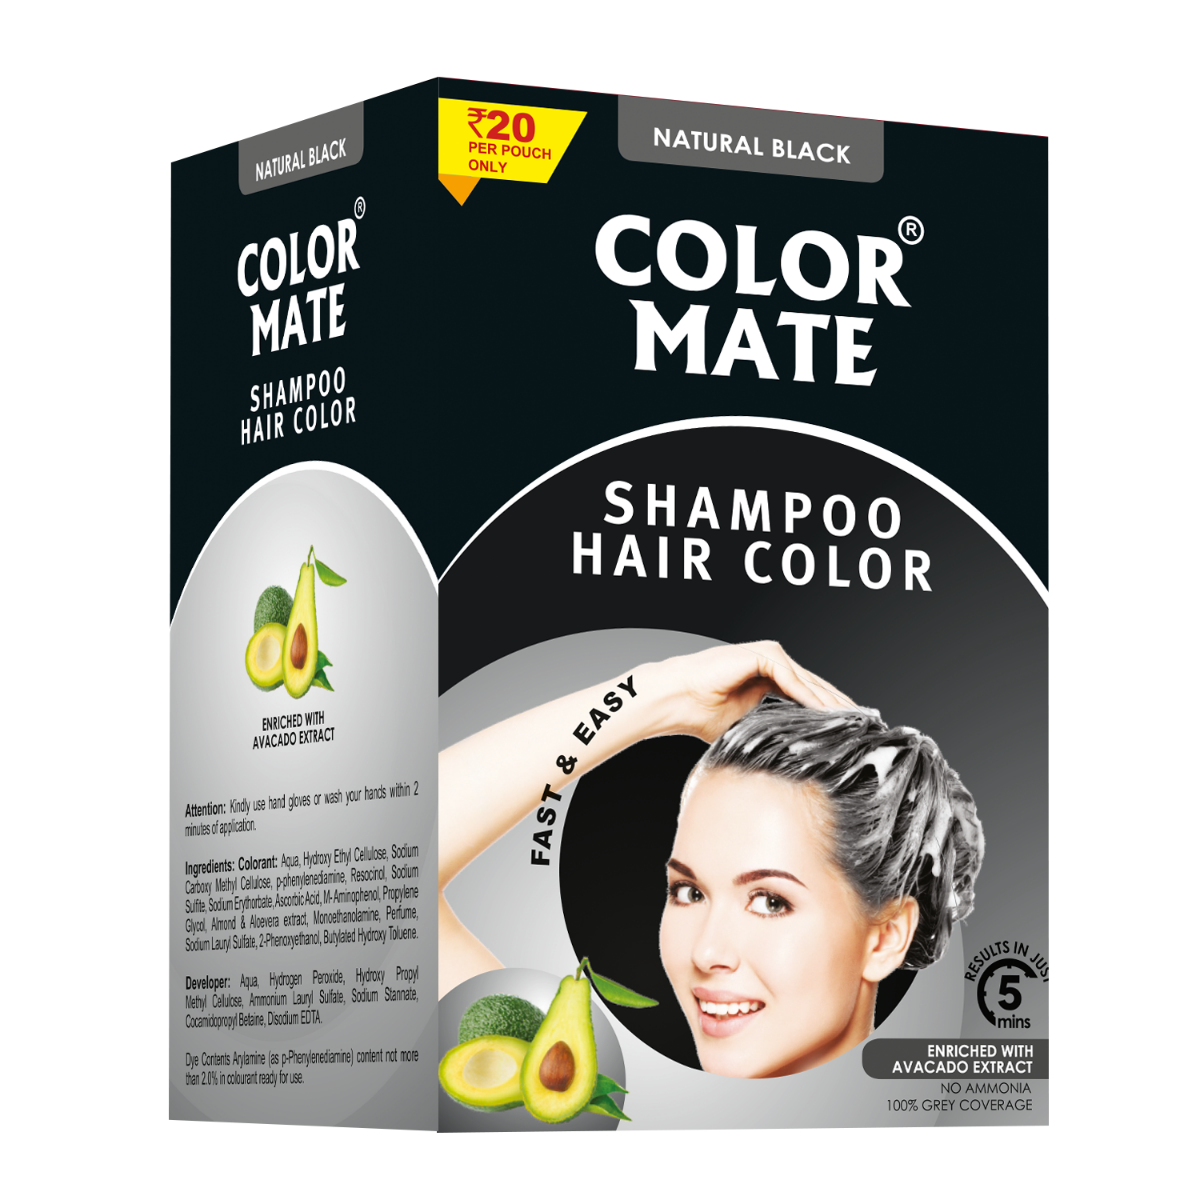 COLOR MATE HAIR COLOR SHAMPOO - NATURAL BLACK